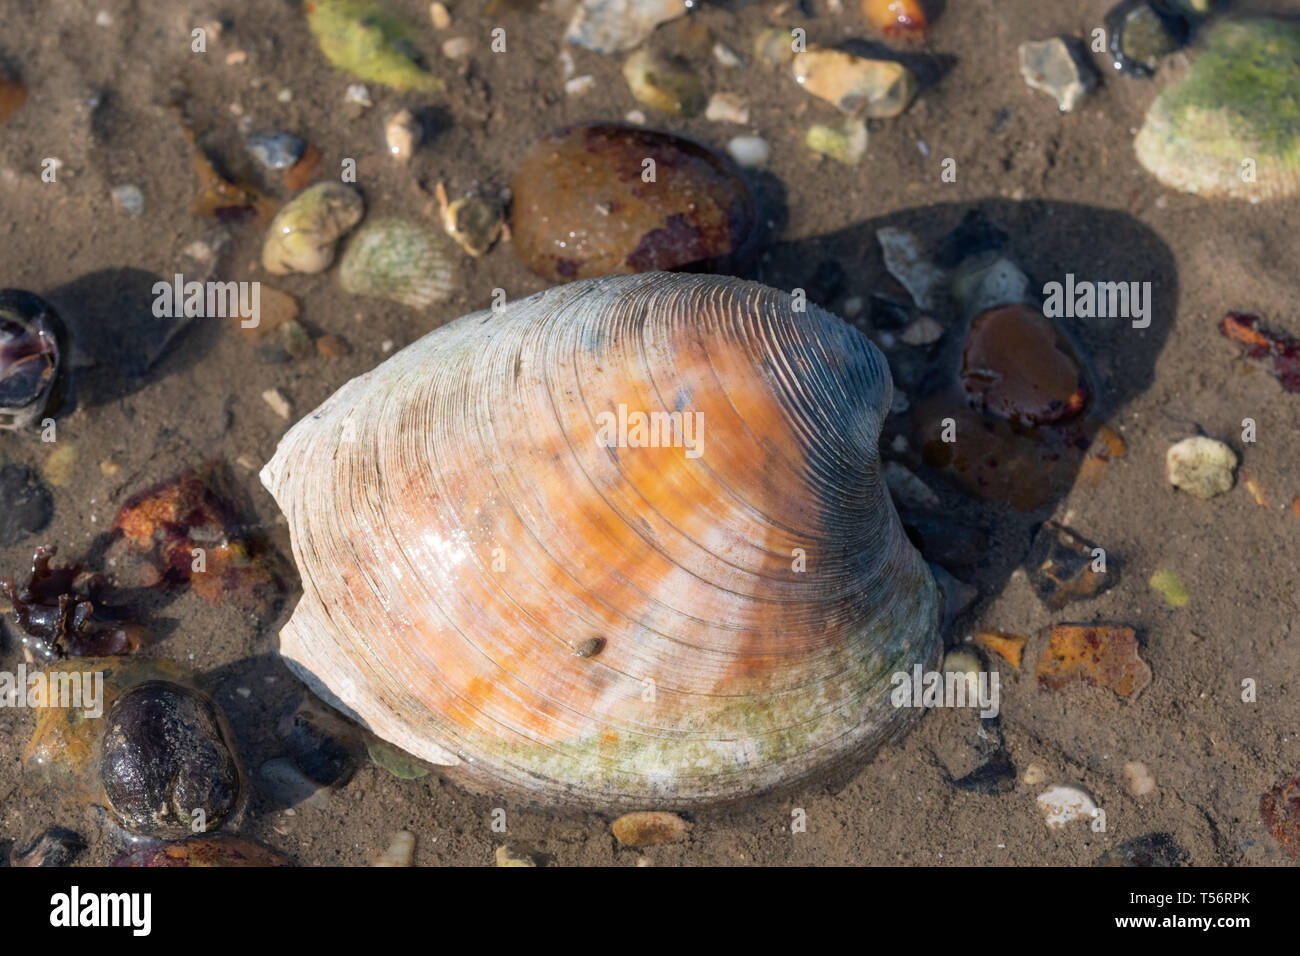 A clam, a bivalve mollusc species of marine wildlife, on a UK beach Stock Photo